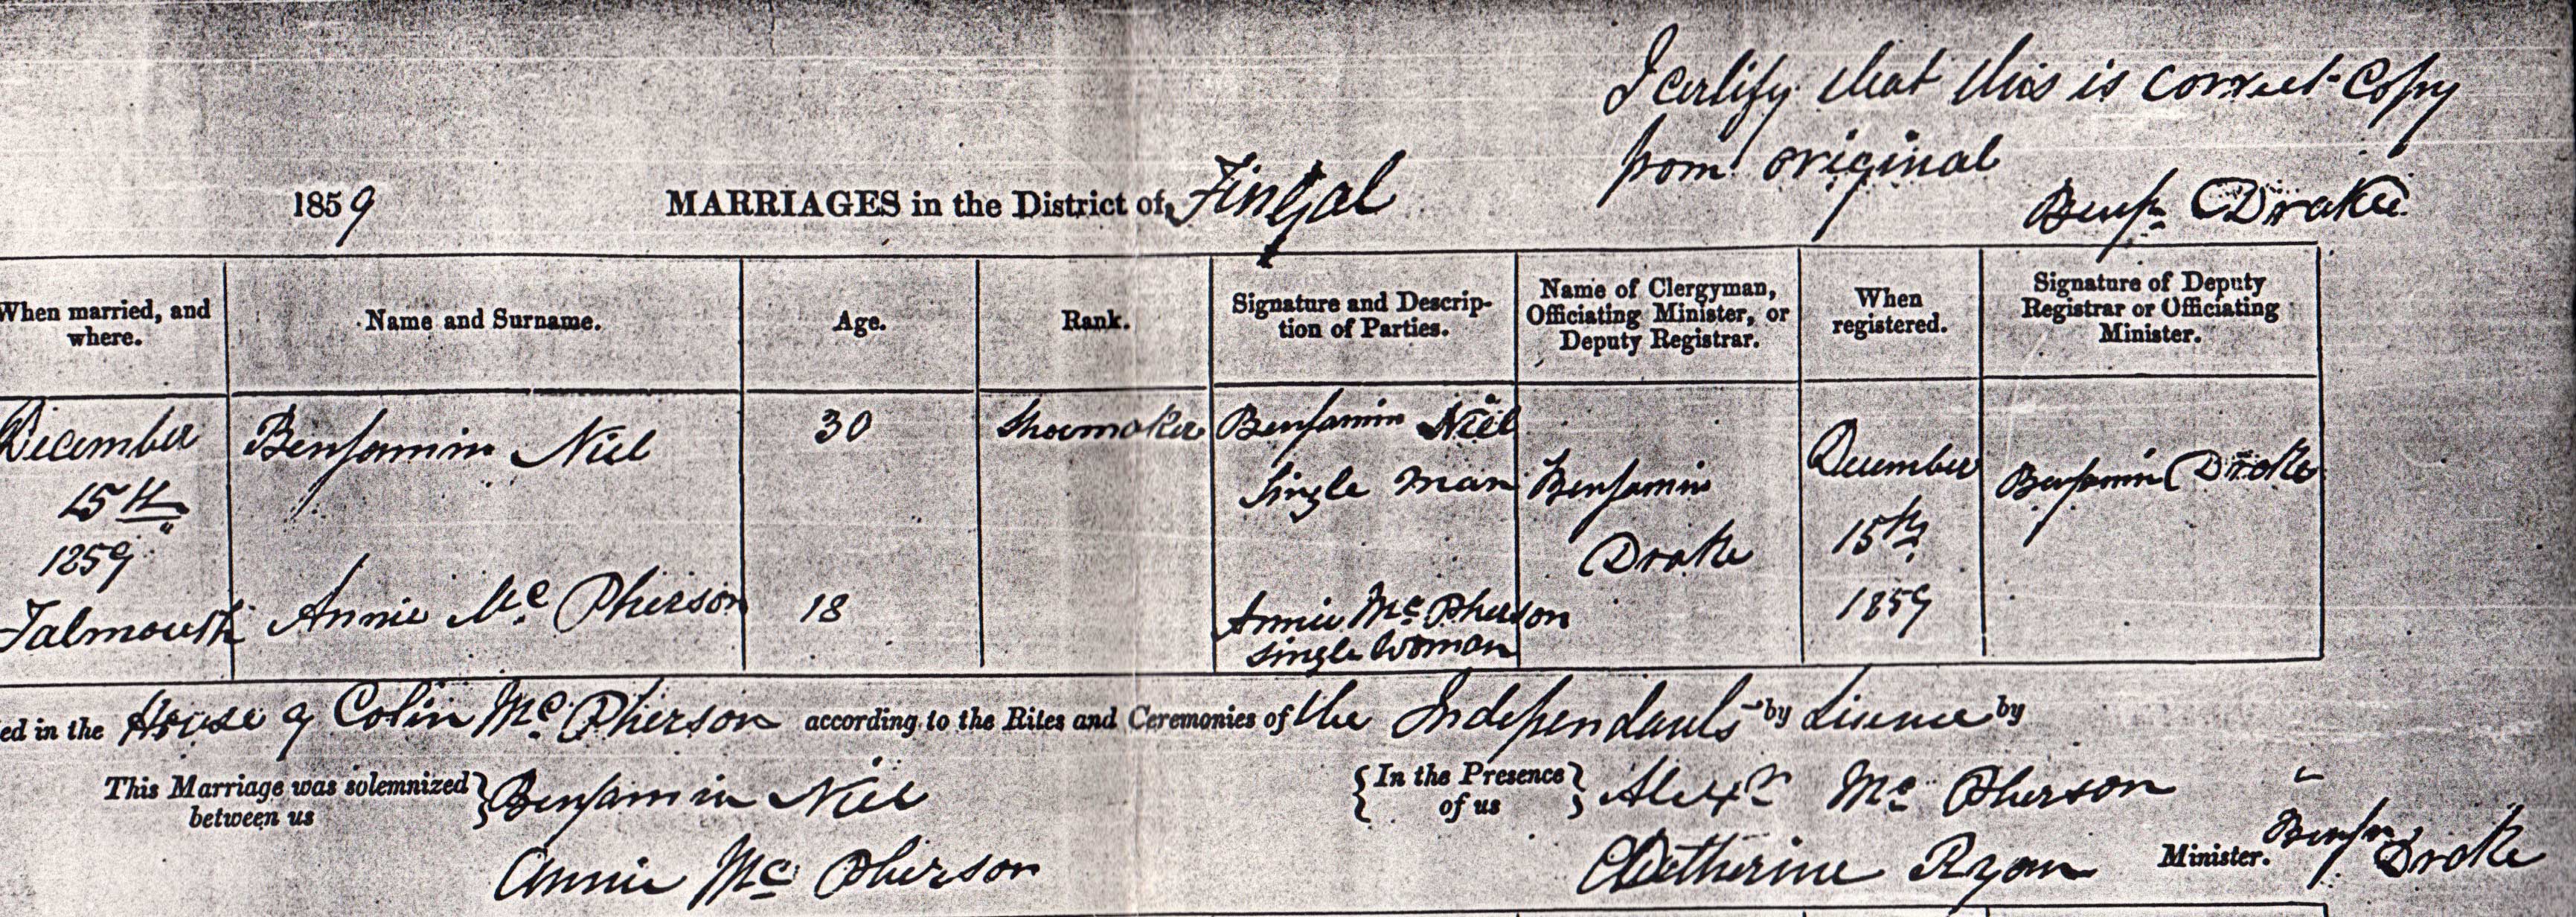 Annie McPherson marriage certificate 1859